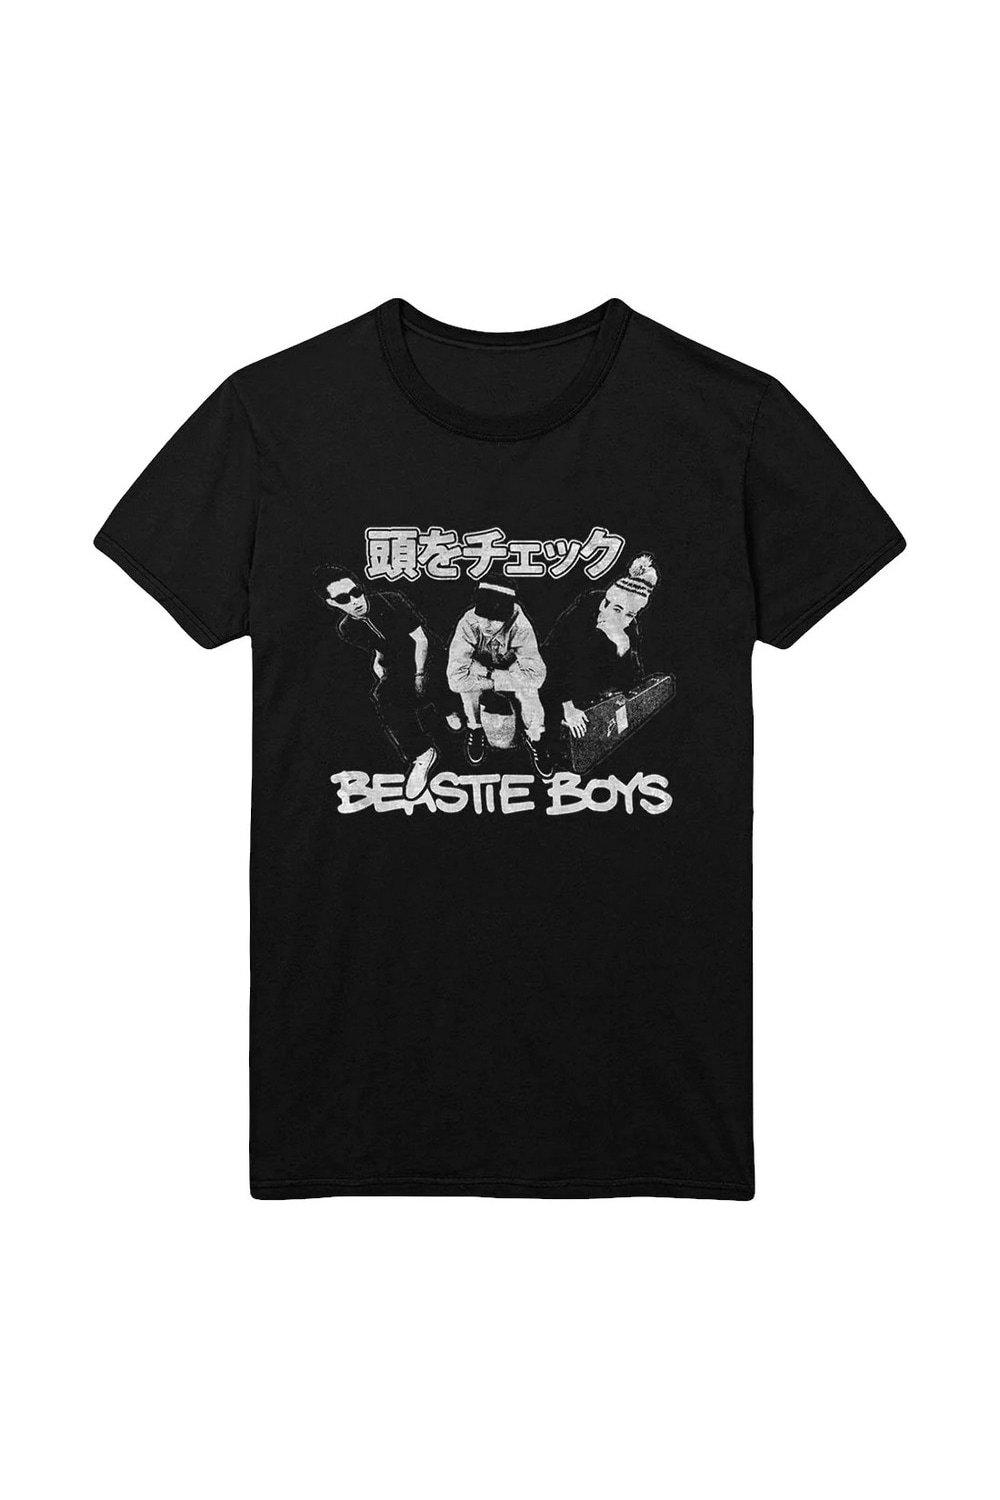 beastie boys check your head Хлопковая футболка Check Your Head Beastie Boys, черный